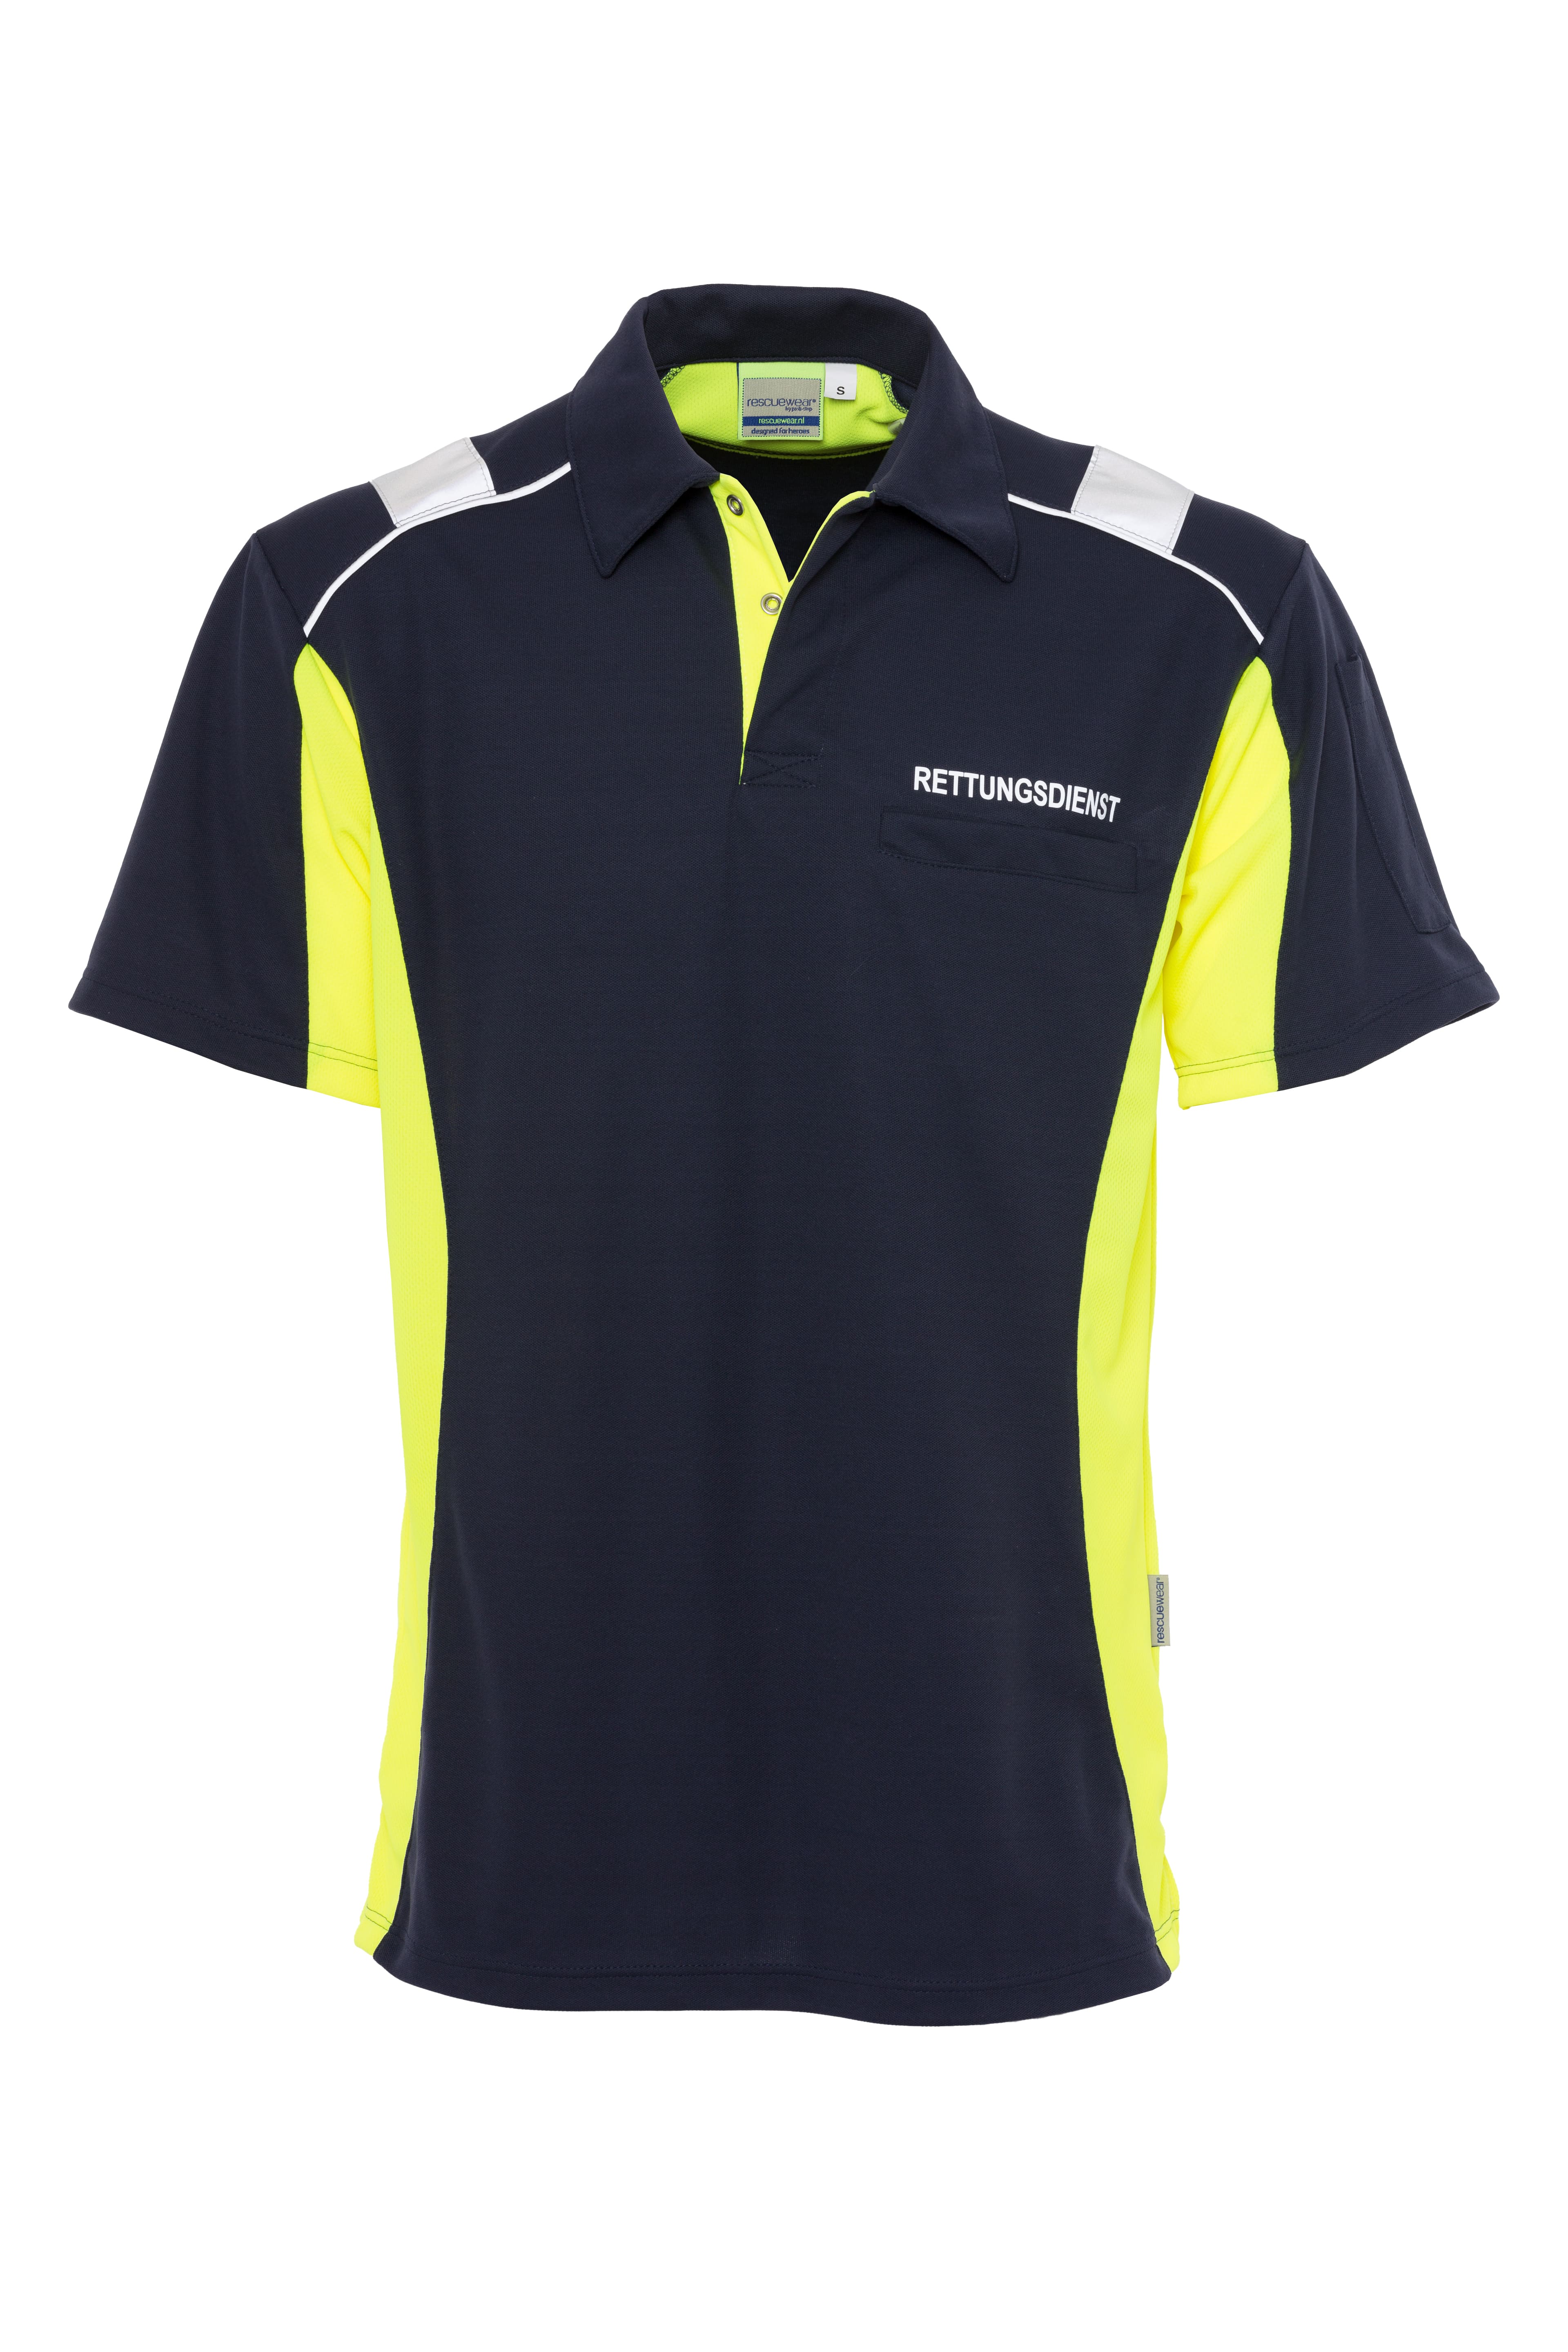 Rescuewear Poloshirt kurze Ärmel Dynamic Marineblau / Neon Gelb - XS